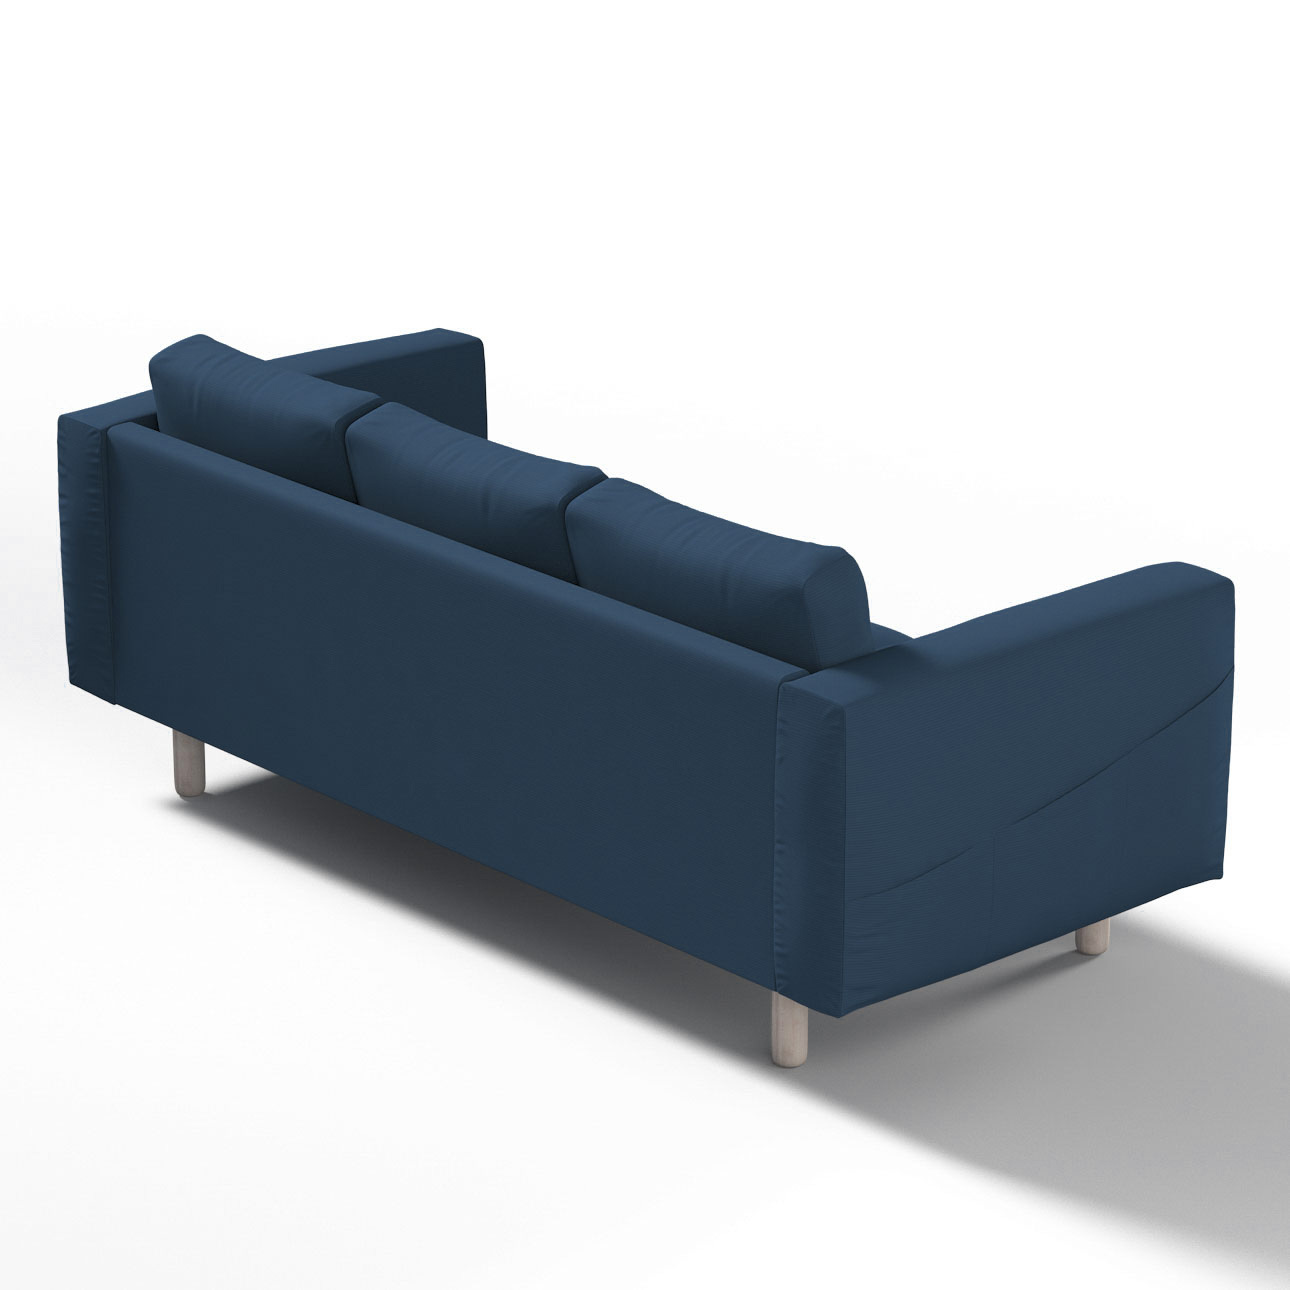 Bezug für Norsborg 3-Sitzer Sofa, marinenblau , Norsborg 3-Sitzer Sofabezug günstig online kaufen